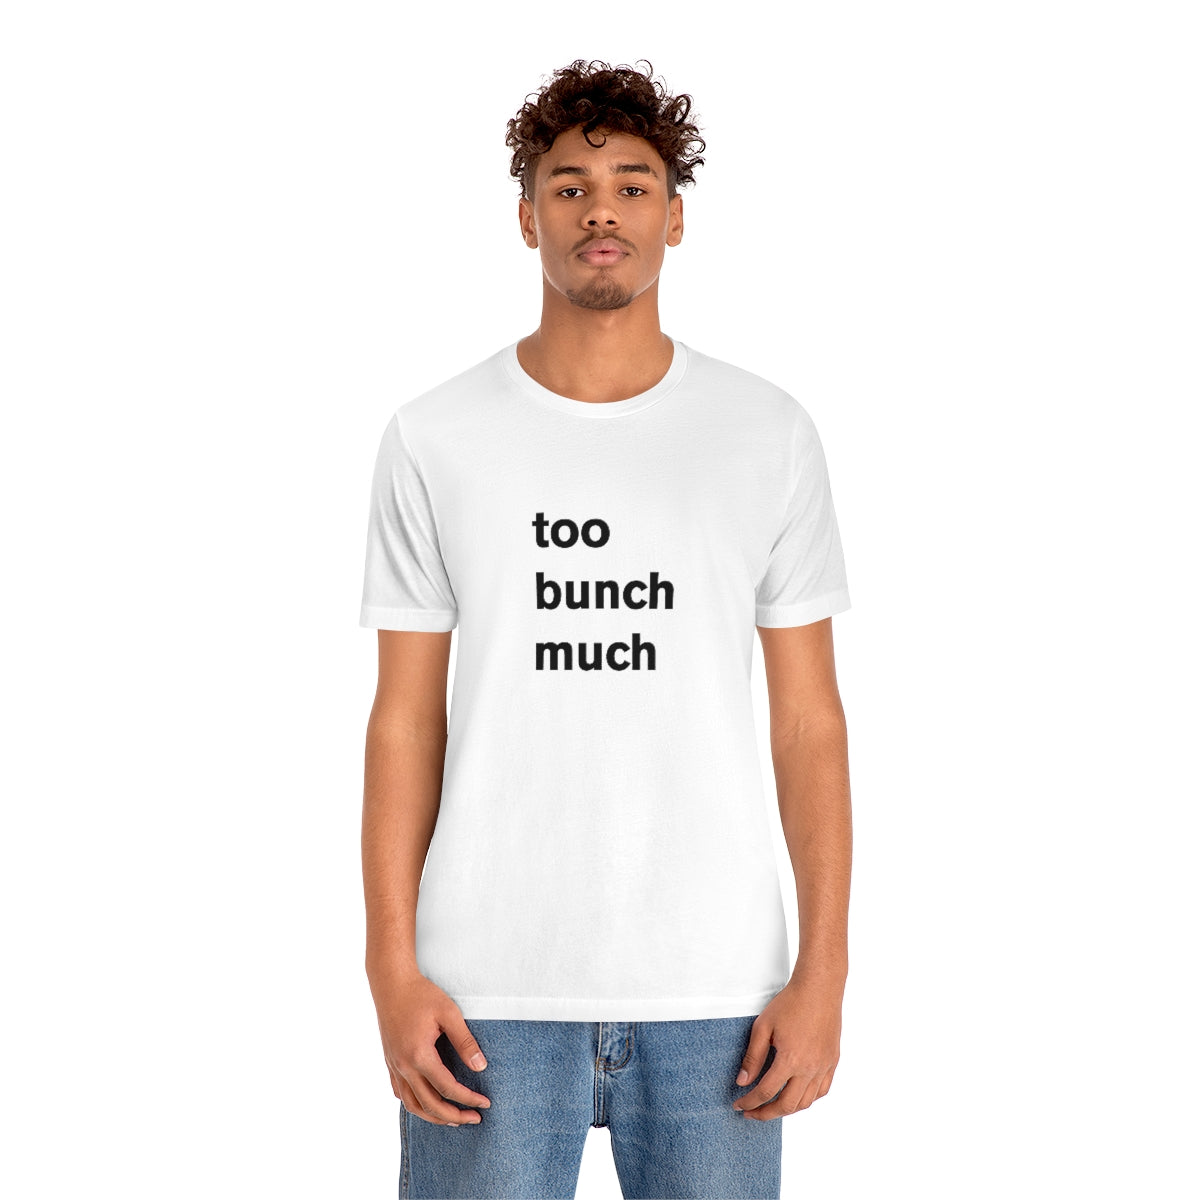 too bunch much - t-shirt